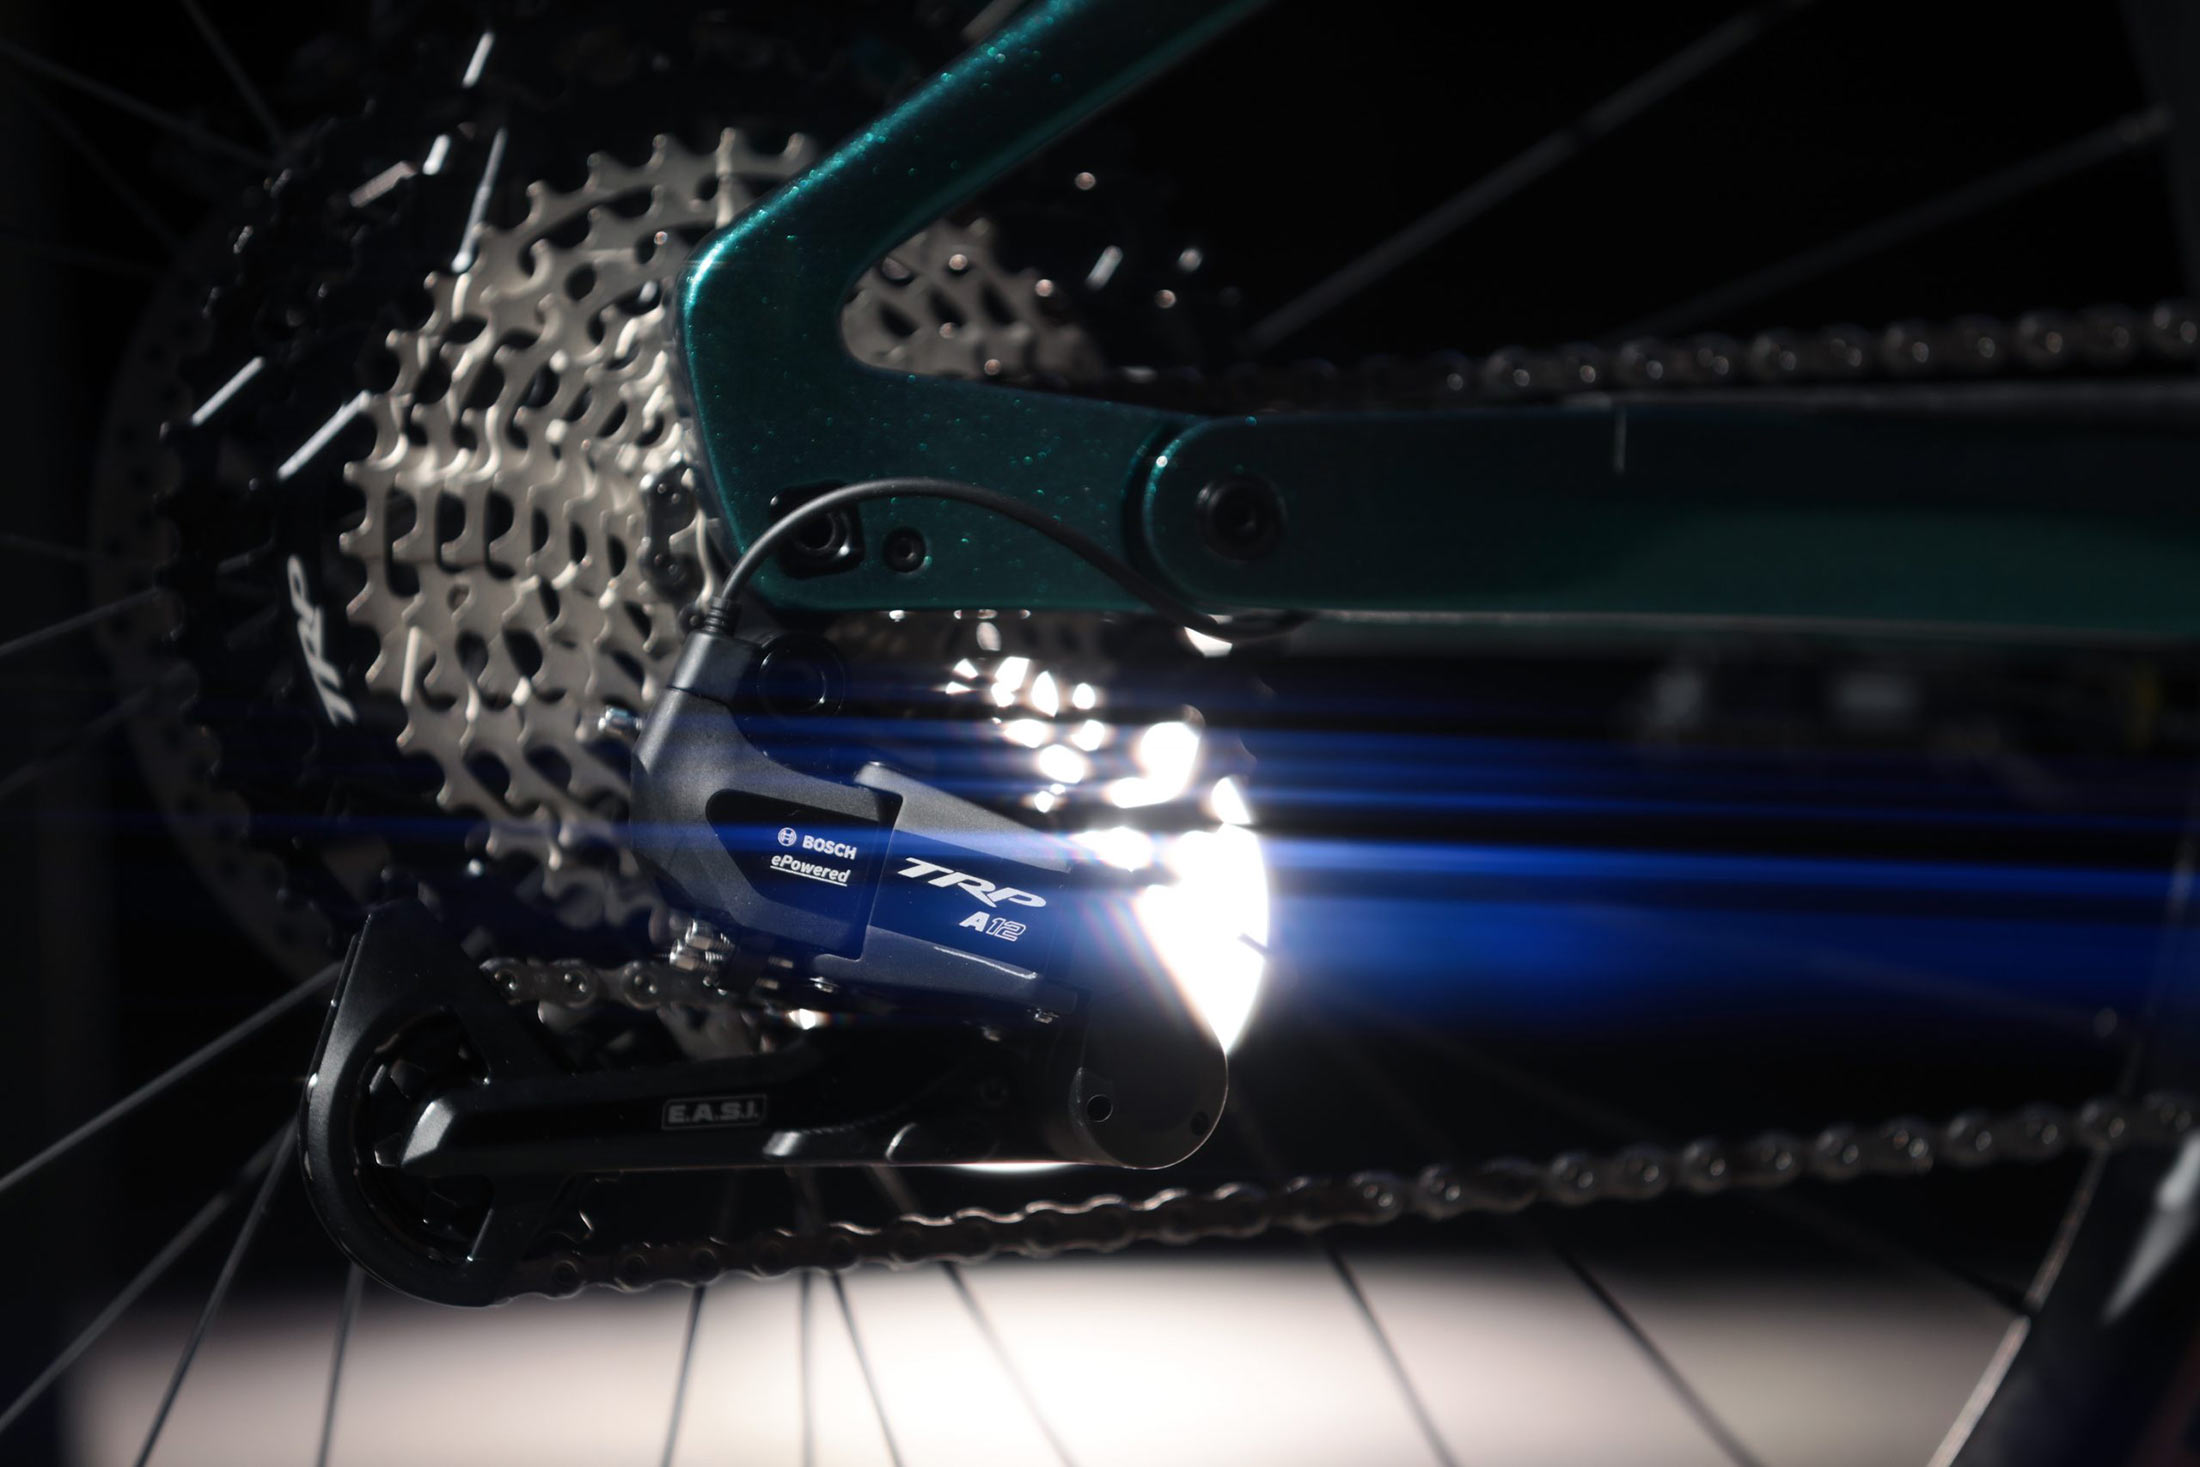 bosch trp easi automatic shifting drivetrain for e-bikes.